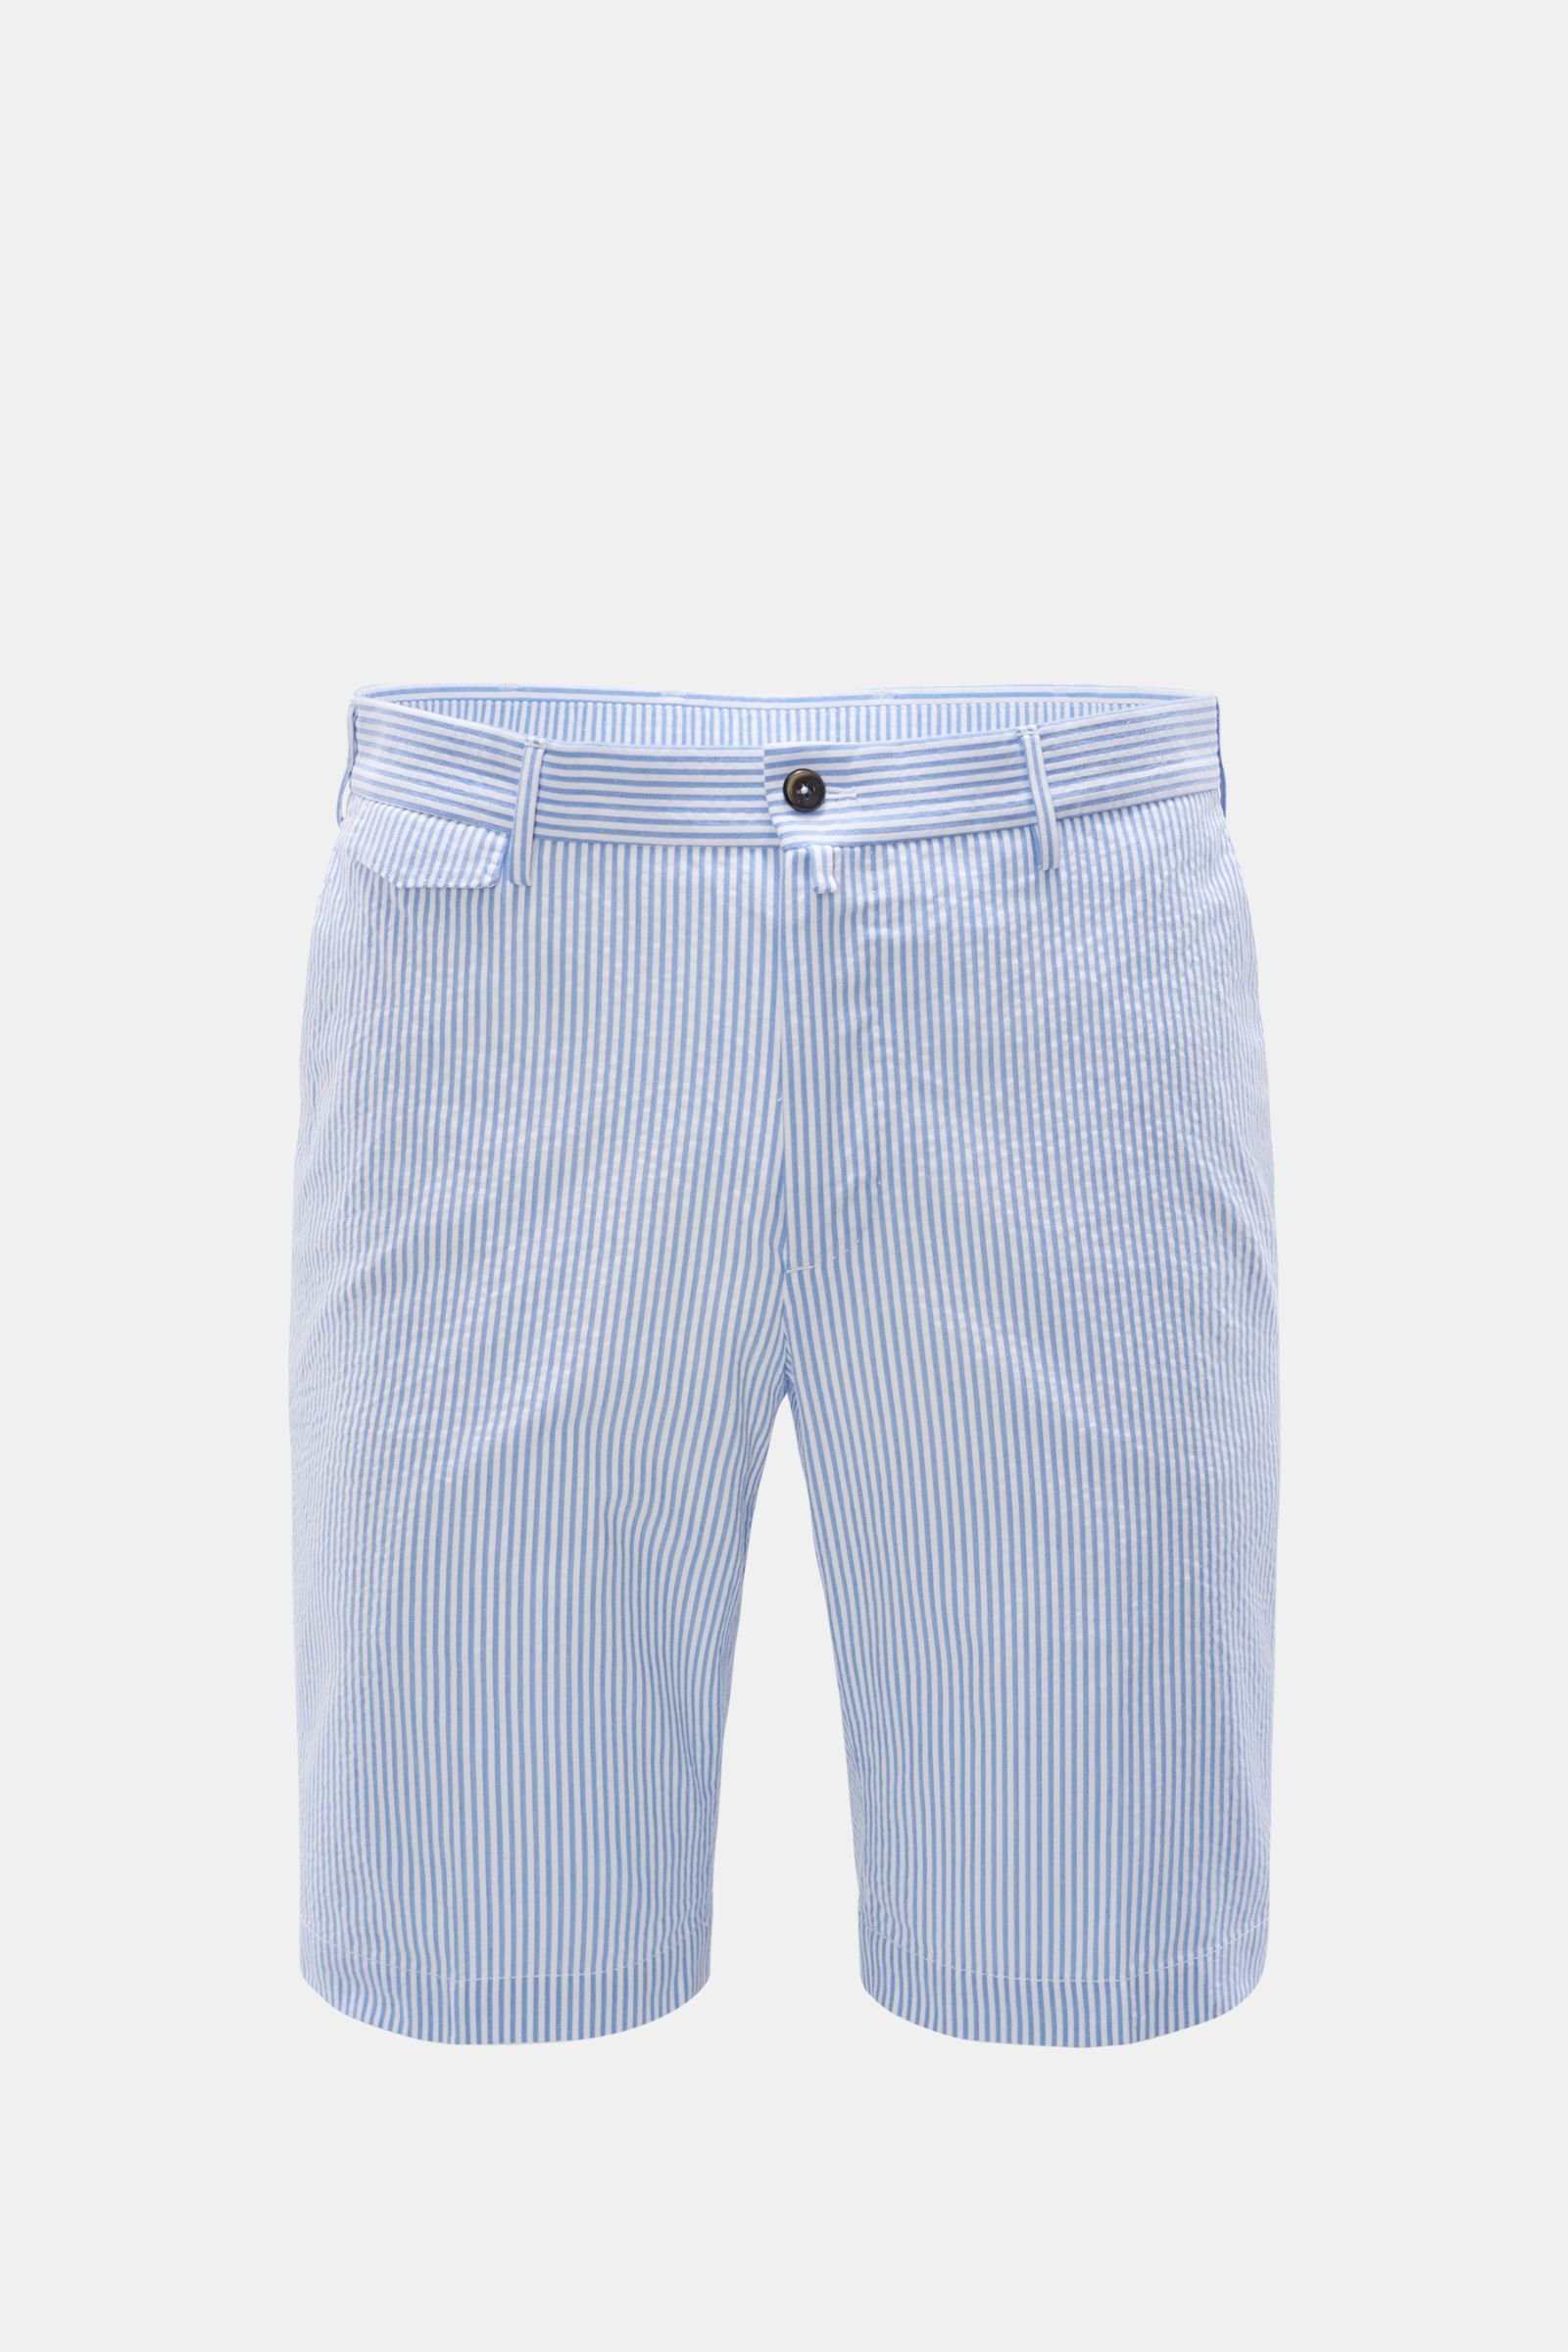 Seersucker Bermuda shorts light blue/white striped